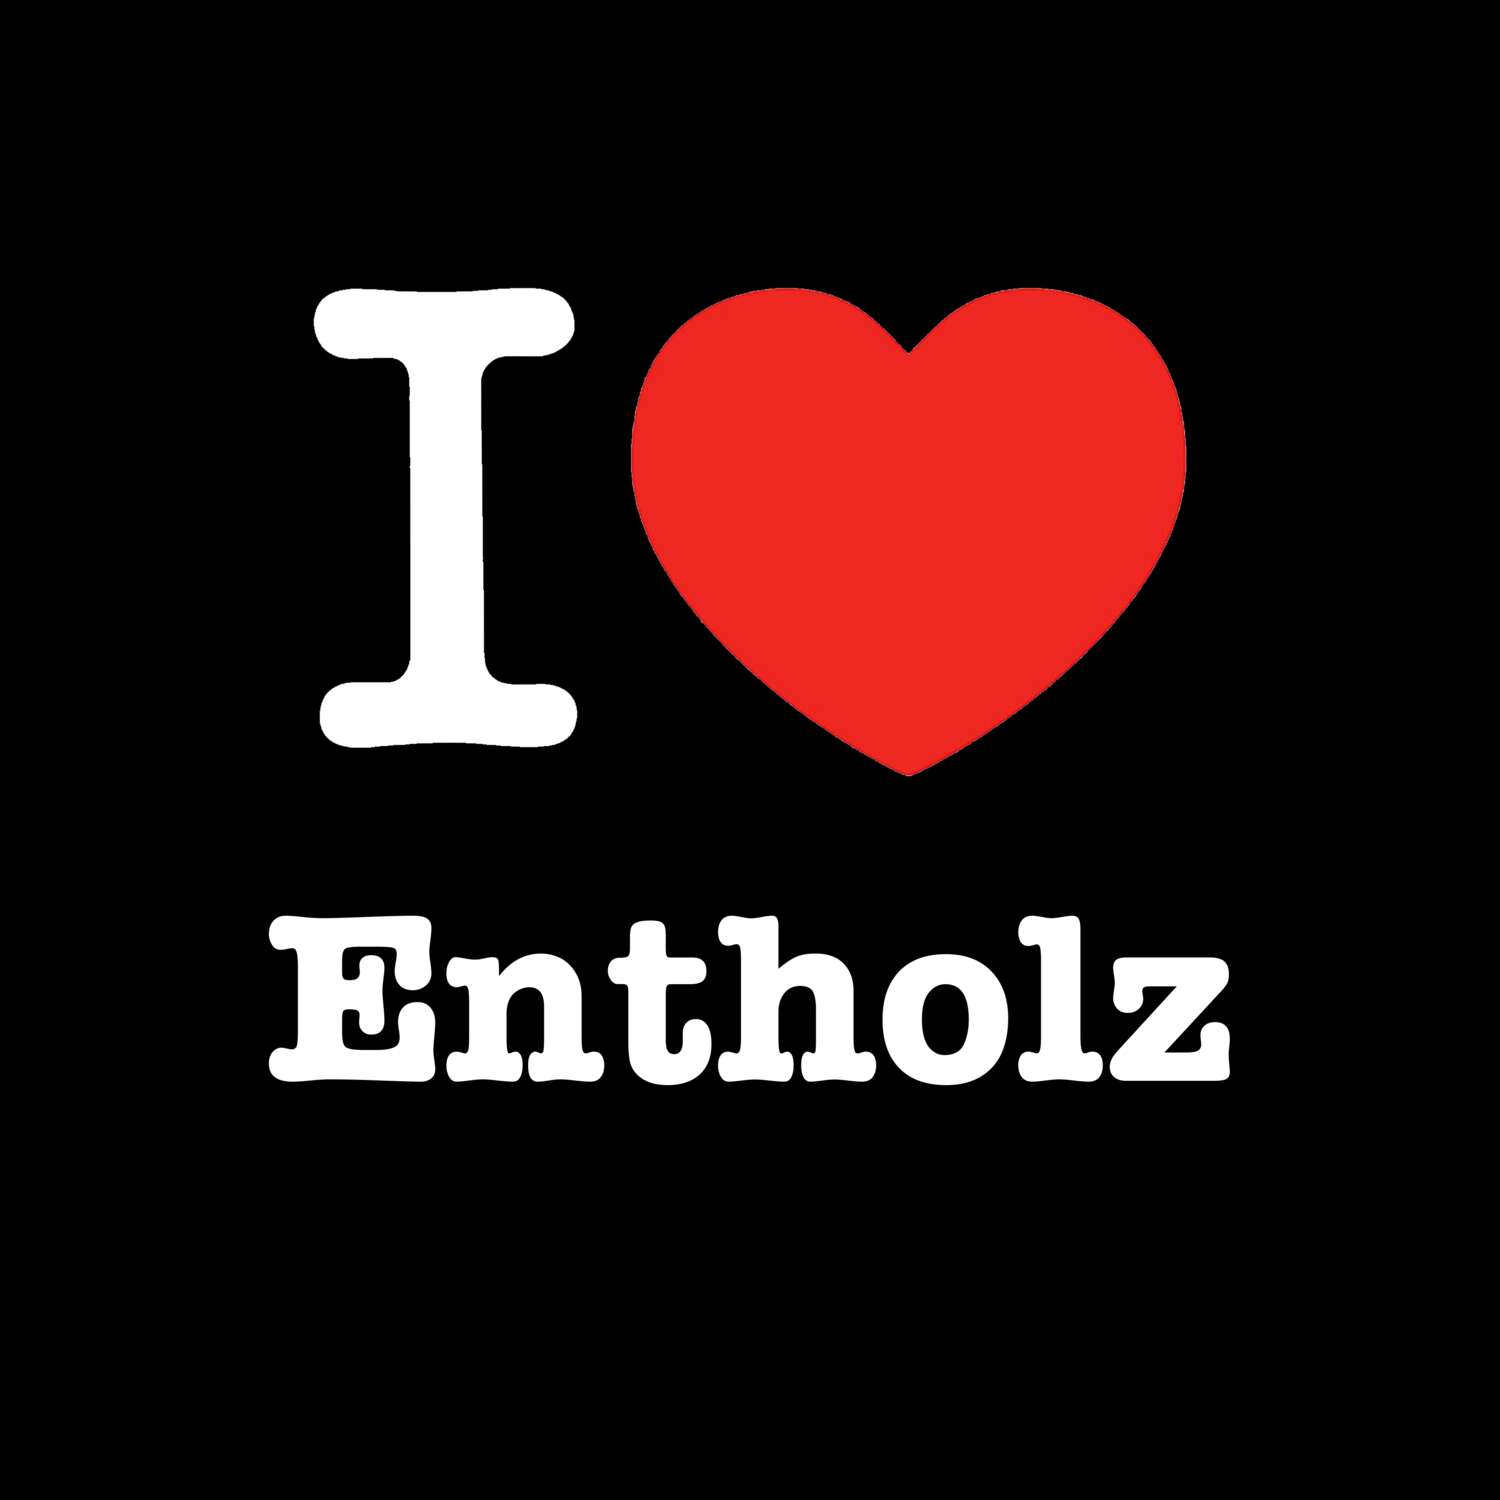 Entholz T-Shirt »I love«